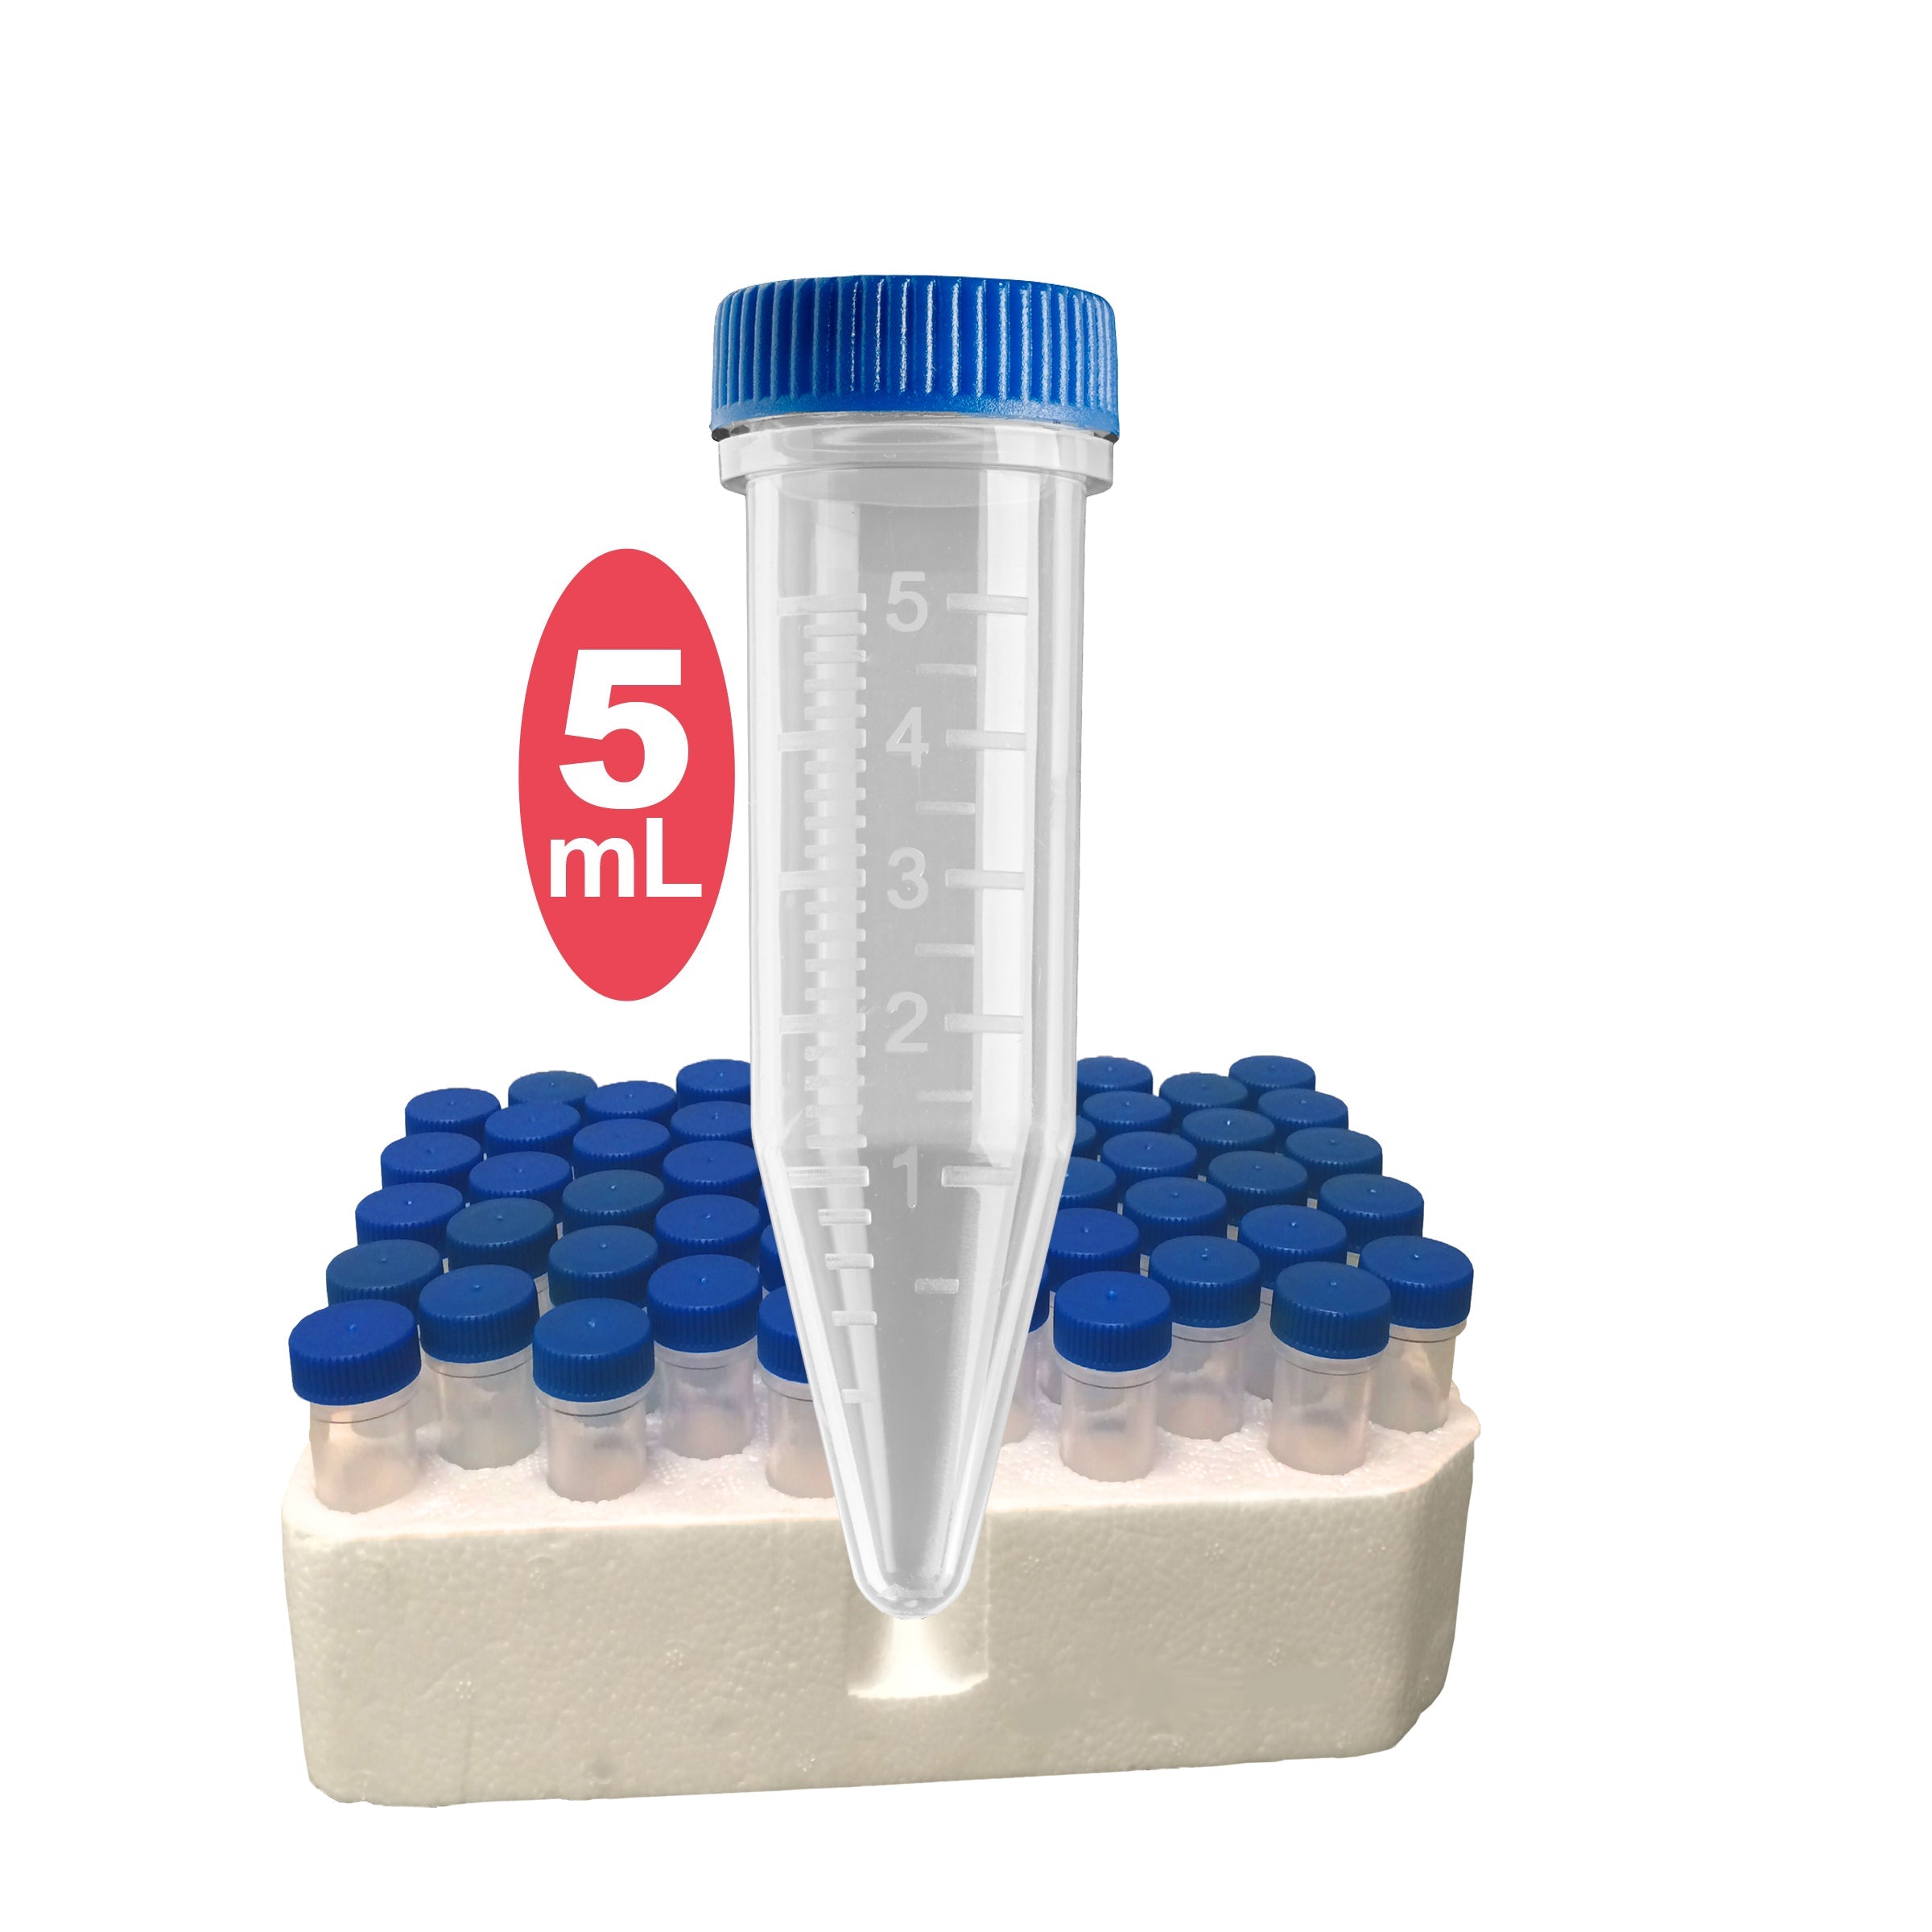 MTC Bio C2530, 5ml Screw-Cap MacroTube, Non-Sterile, with Screw Caps Packed Separately, 500/cs